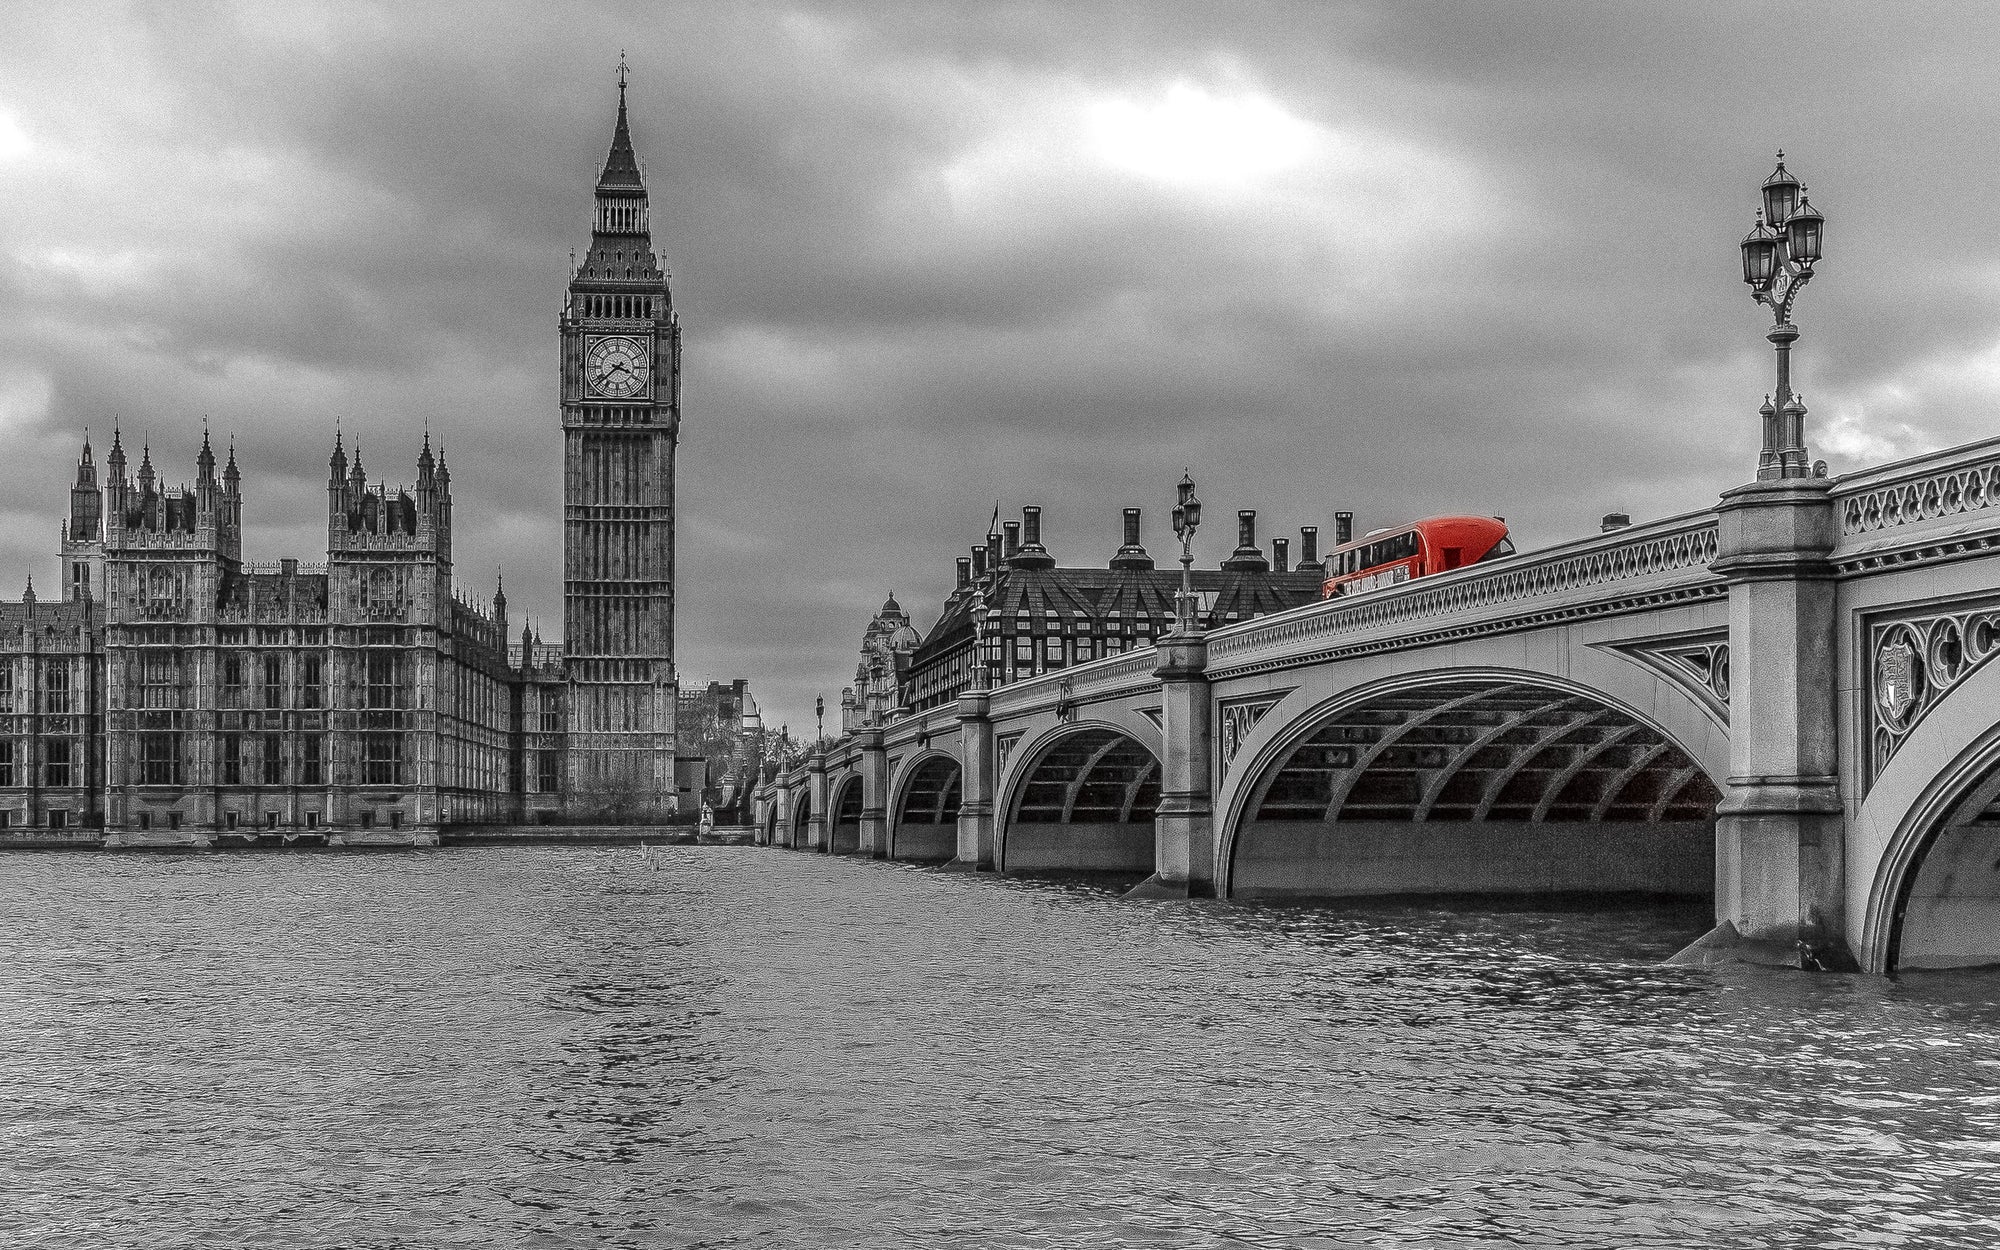 Parliament & Thames